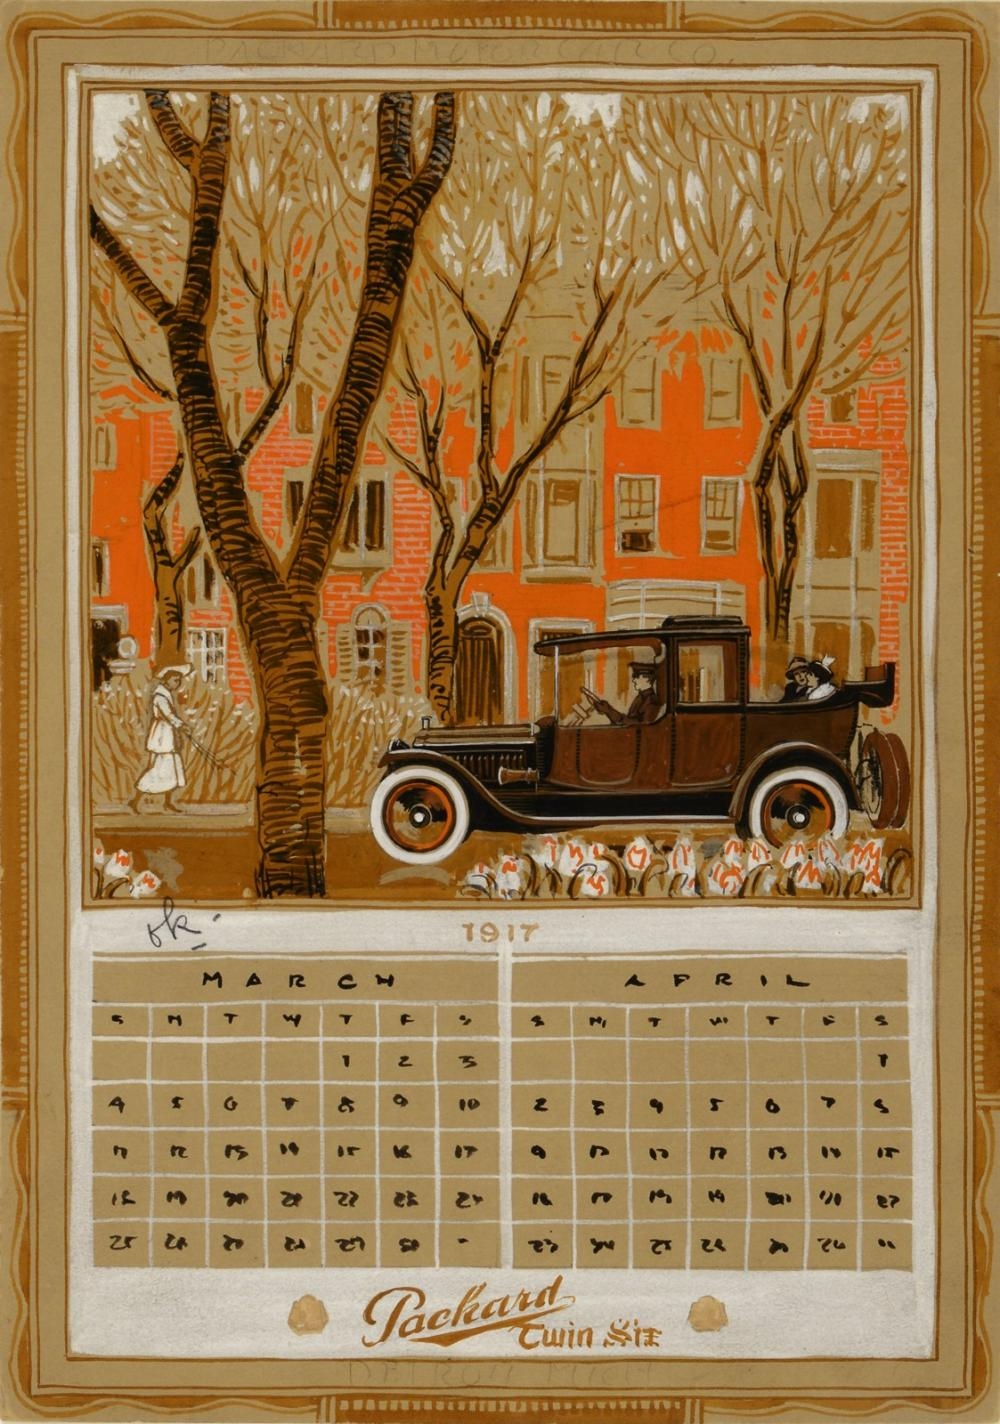 Gustave Baumann Packard Motor Car Company 1917 Calendar March/April